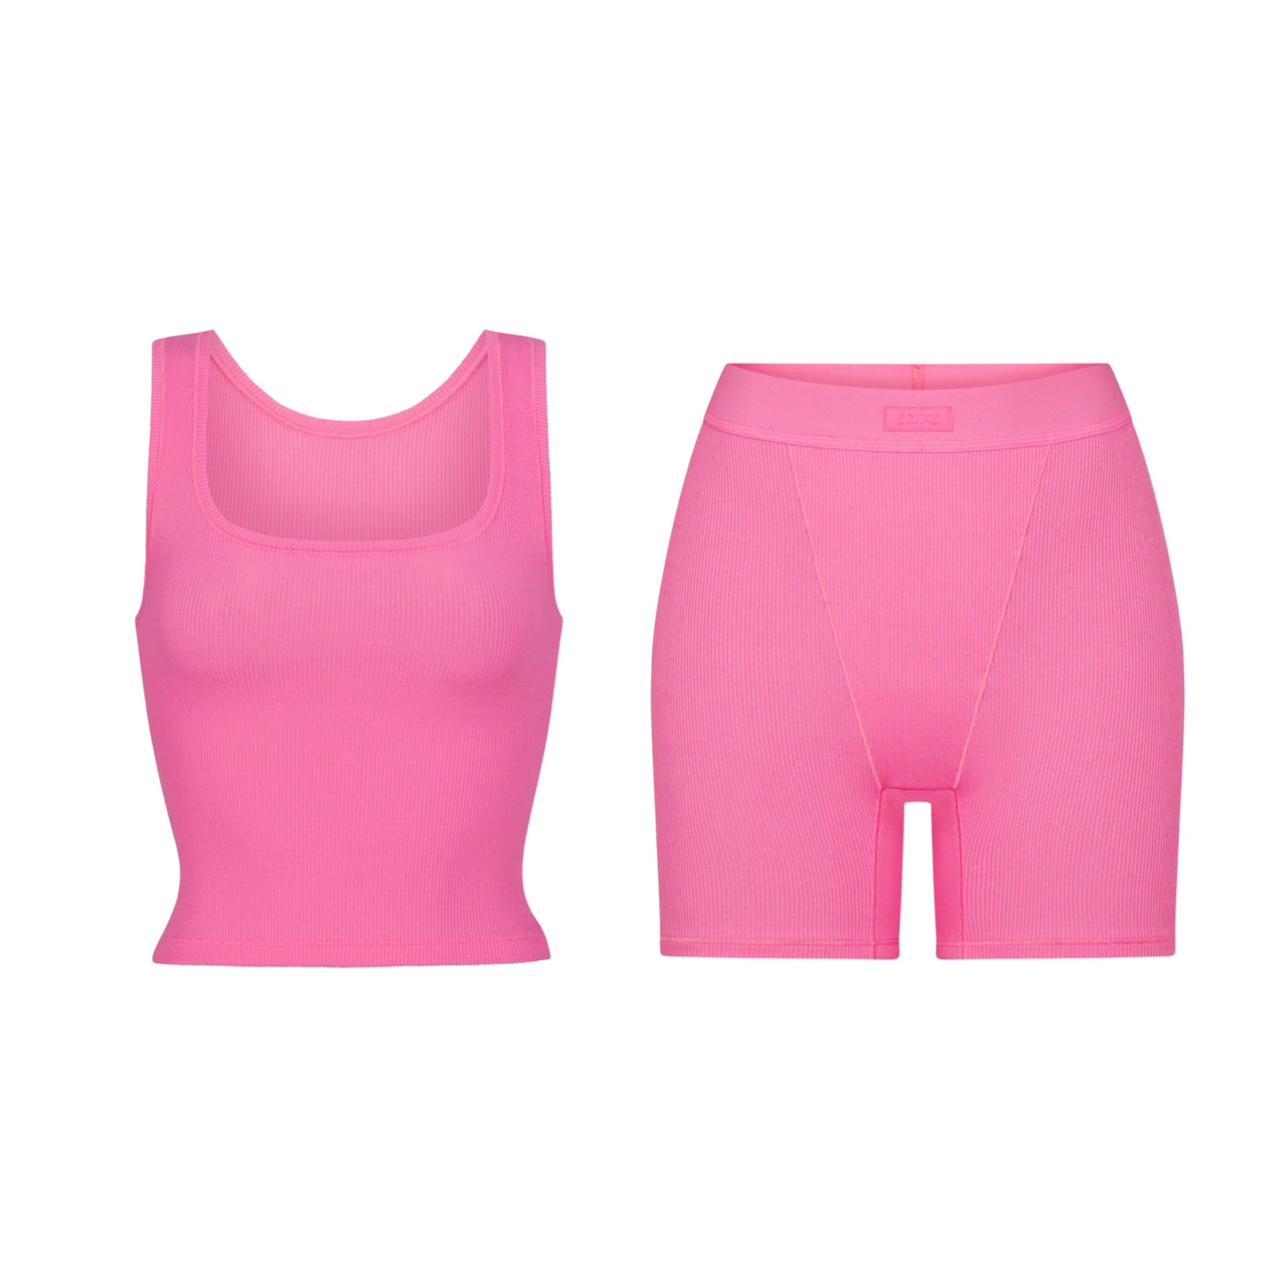 SKIMS Cotton Rib Tank and Cotton Rib Boxer NEW in Pink/Sugar Pink MEDIUM -  Intimates & Sleepwear